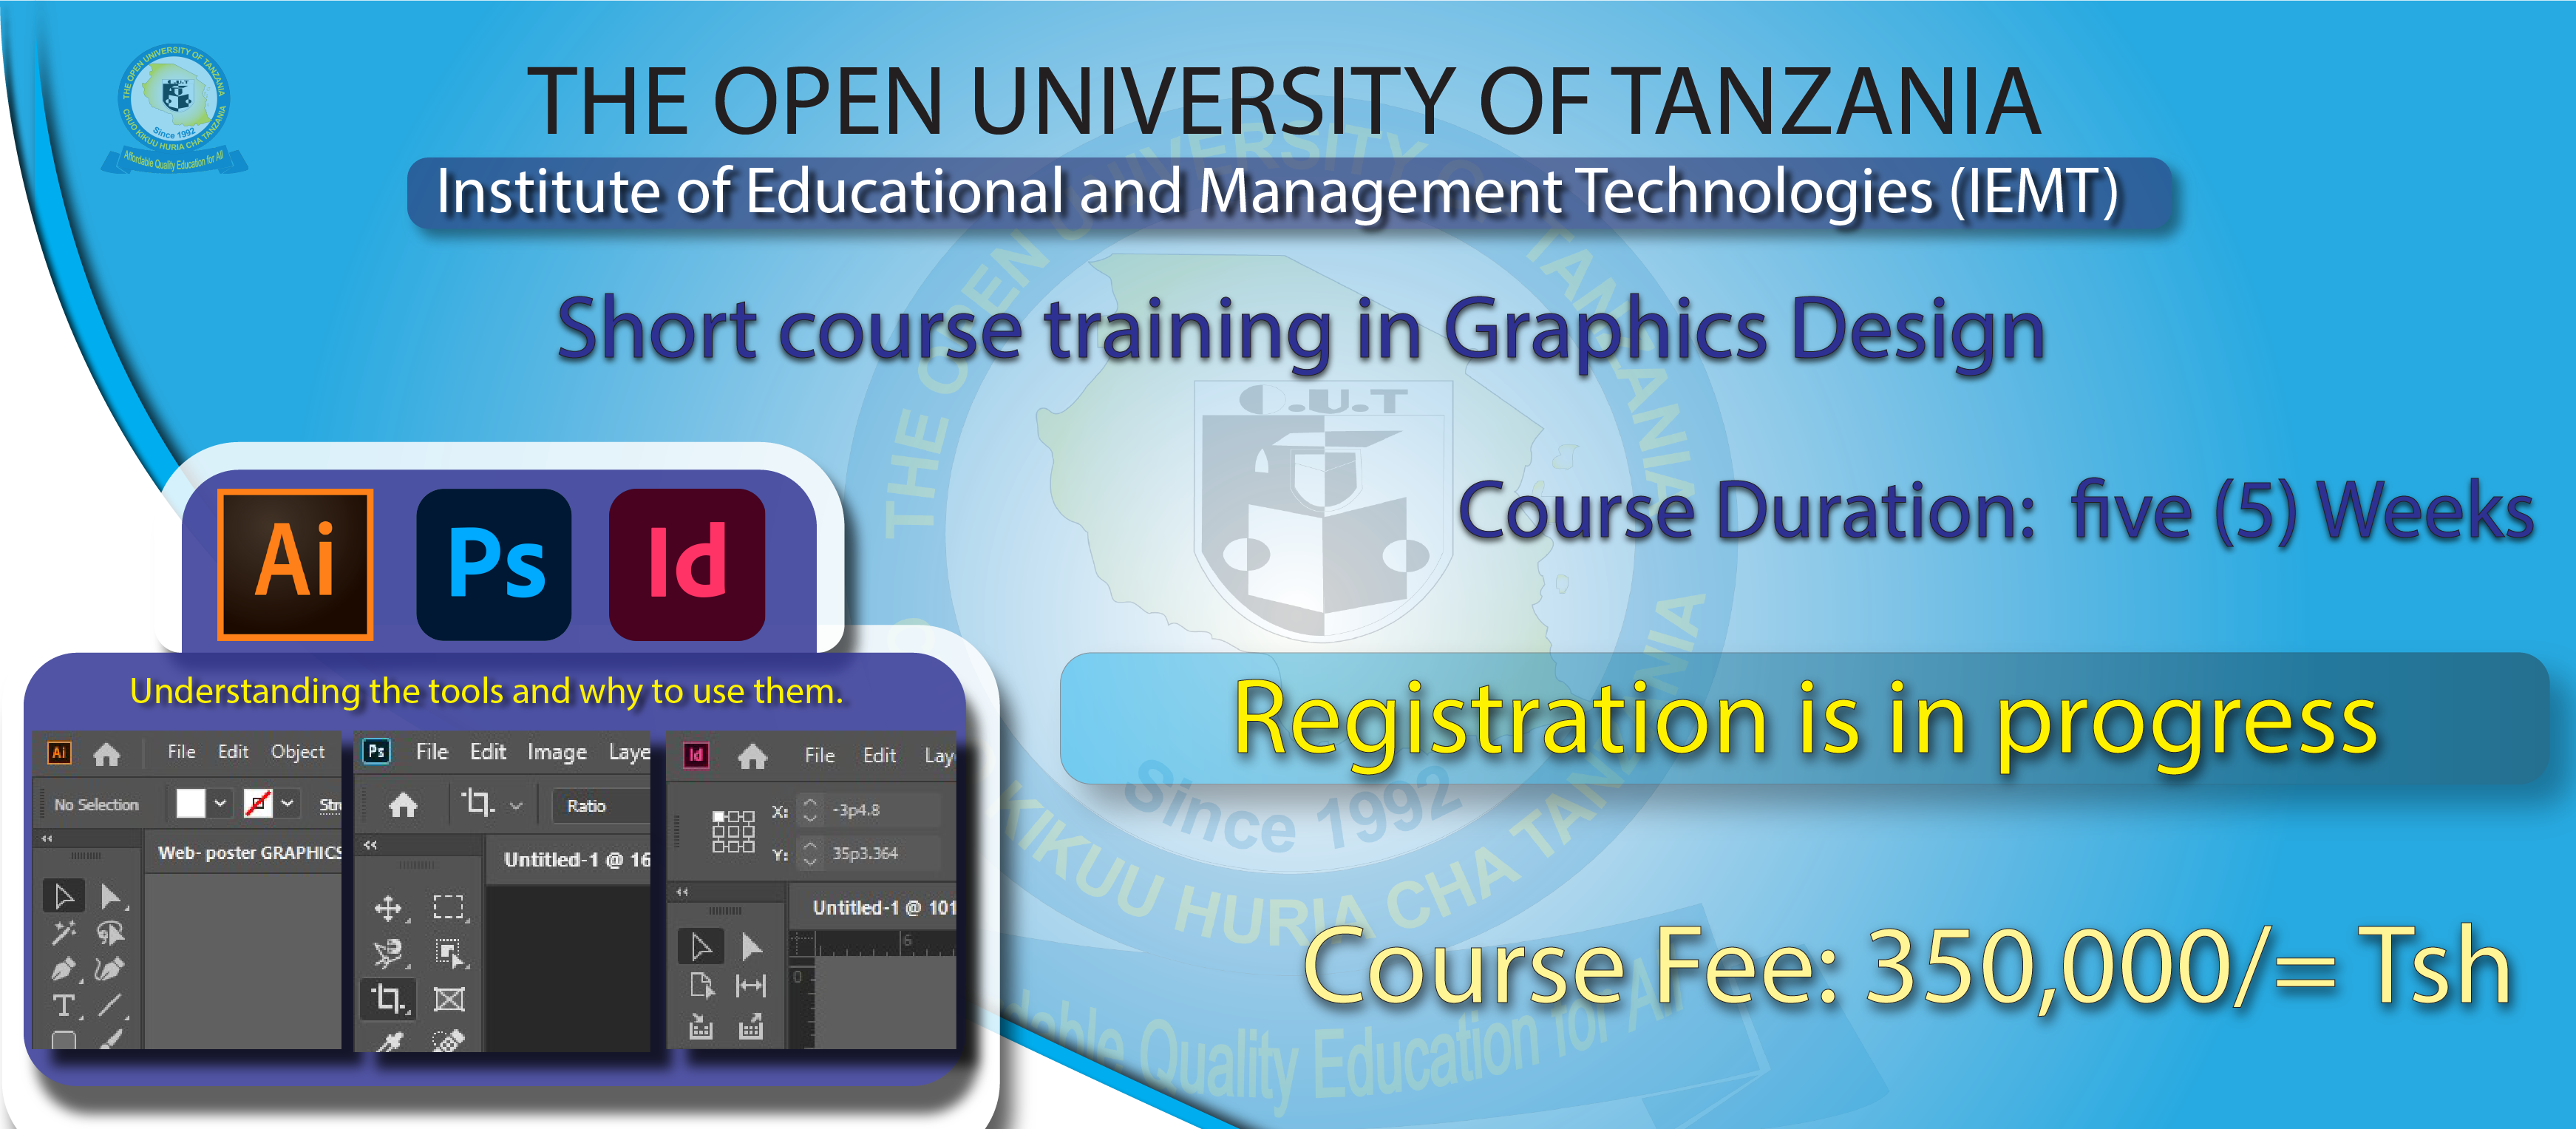 phd application form open university of tanzania